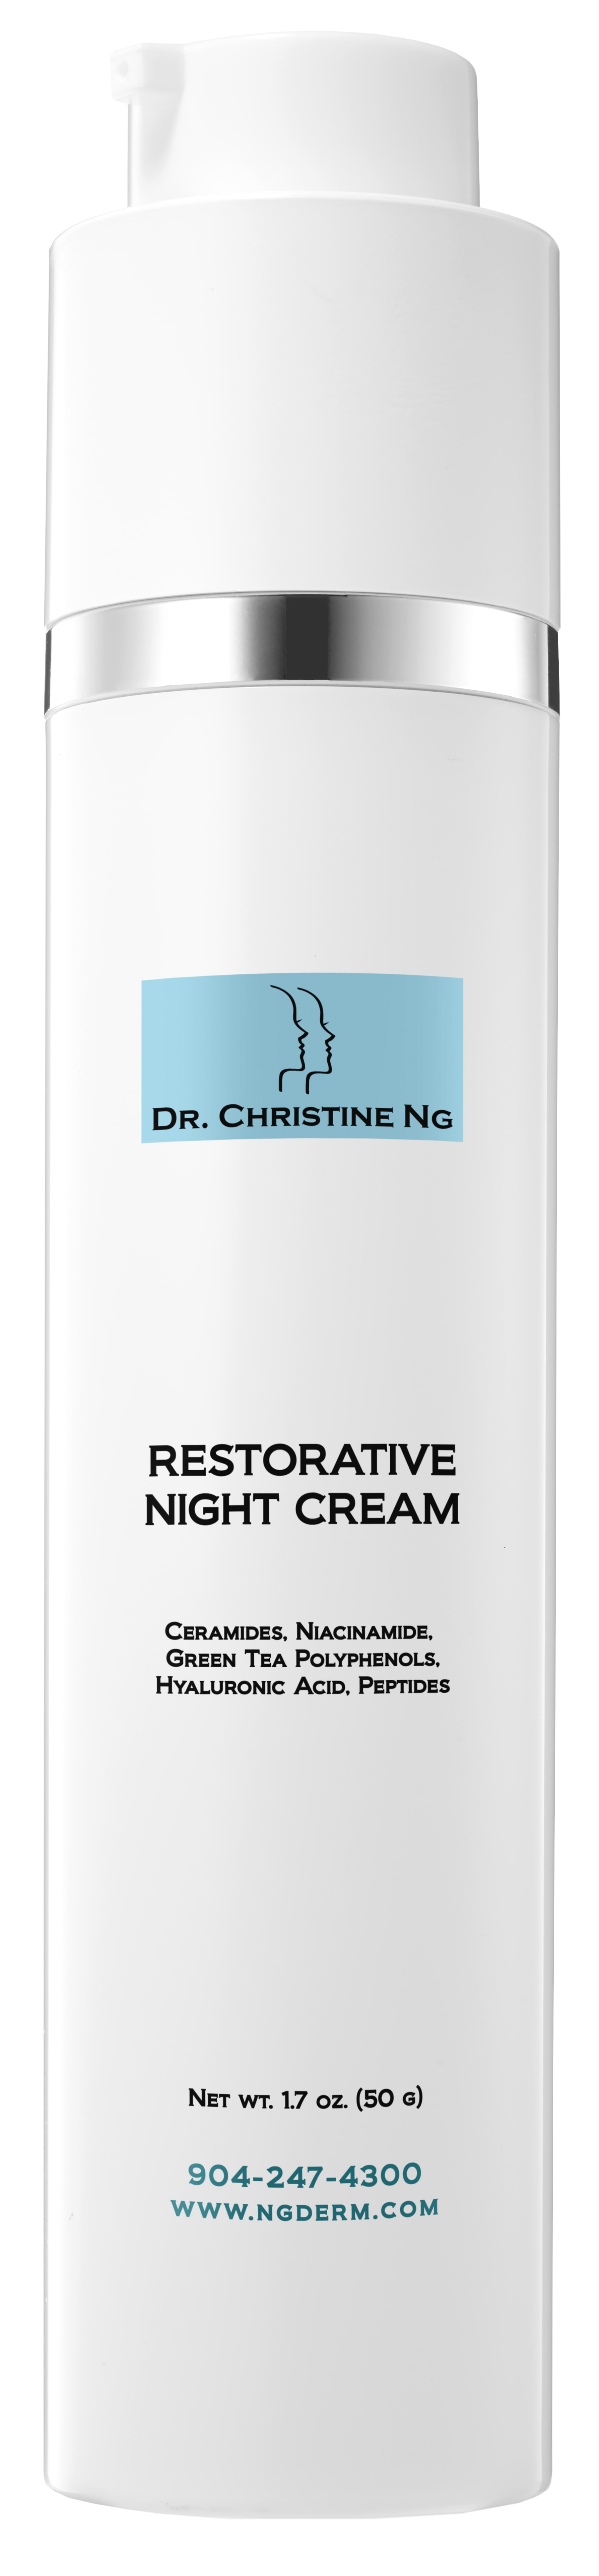 restorative night cream 847 photo